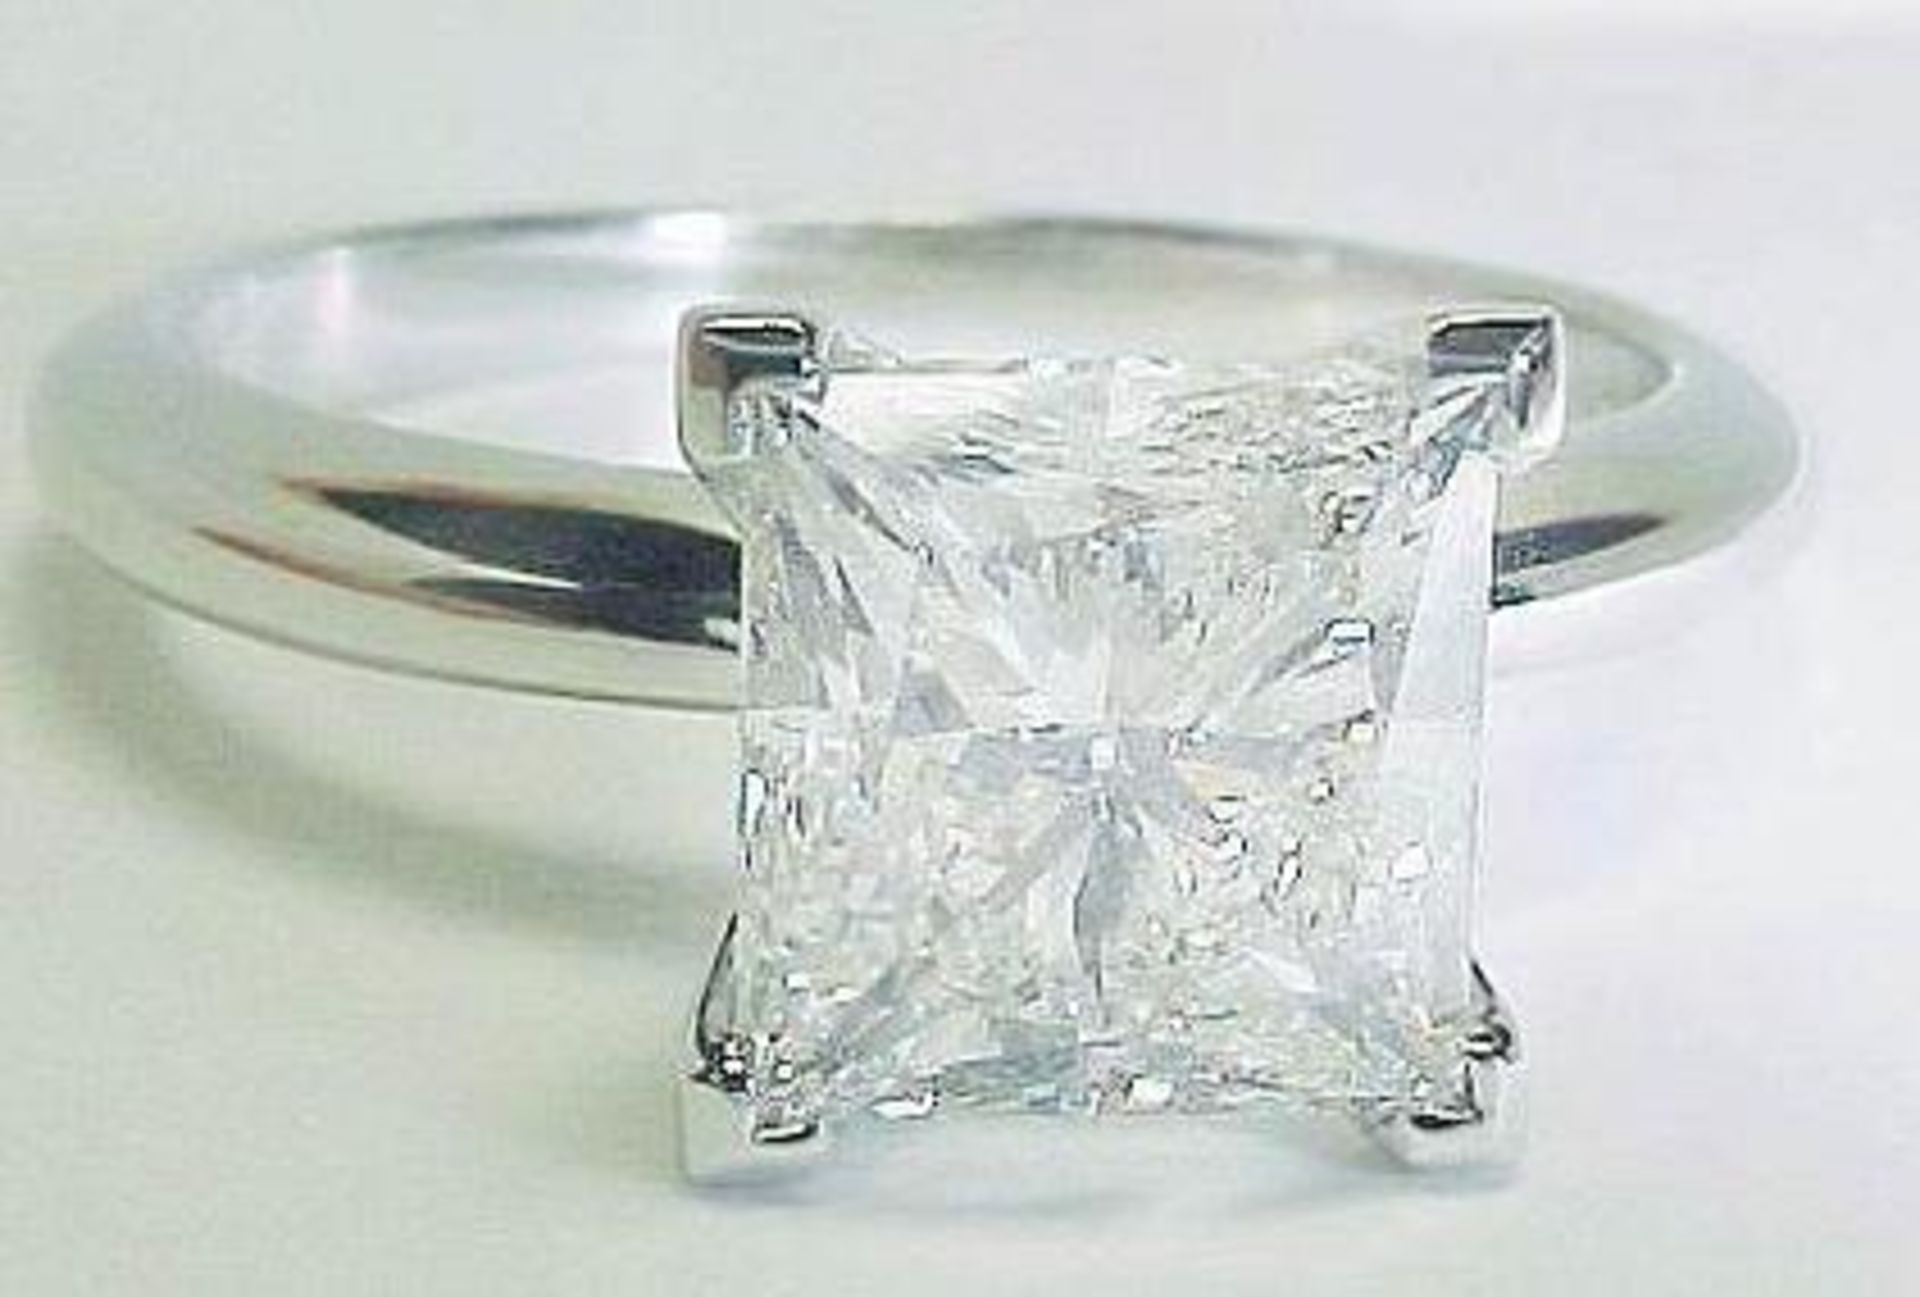 HUGE 4.11 carat genuine diamond solitaire engagement ring.